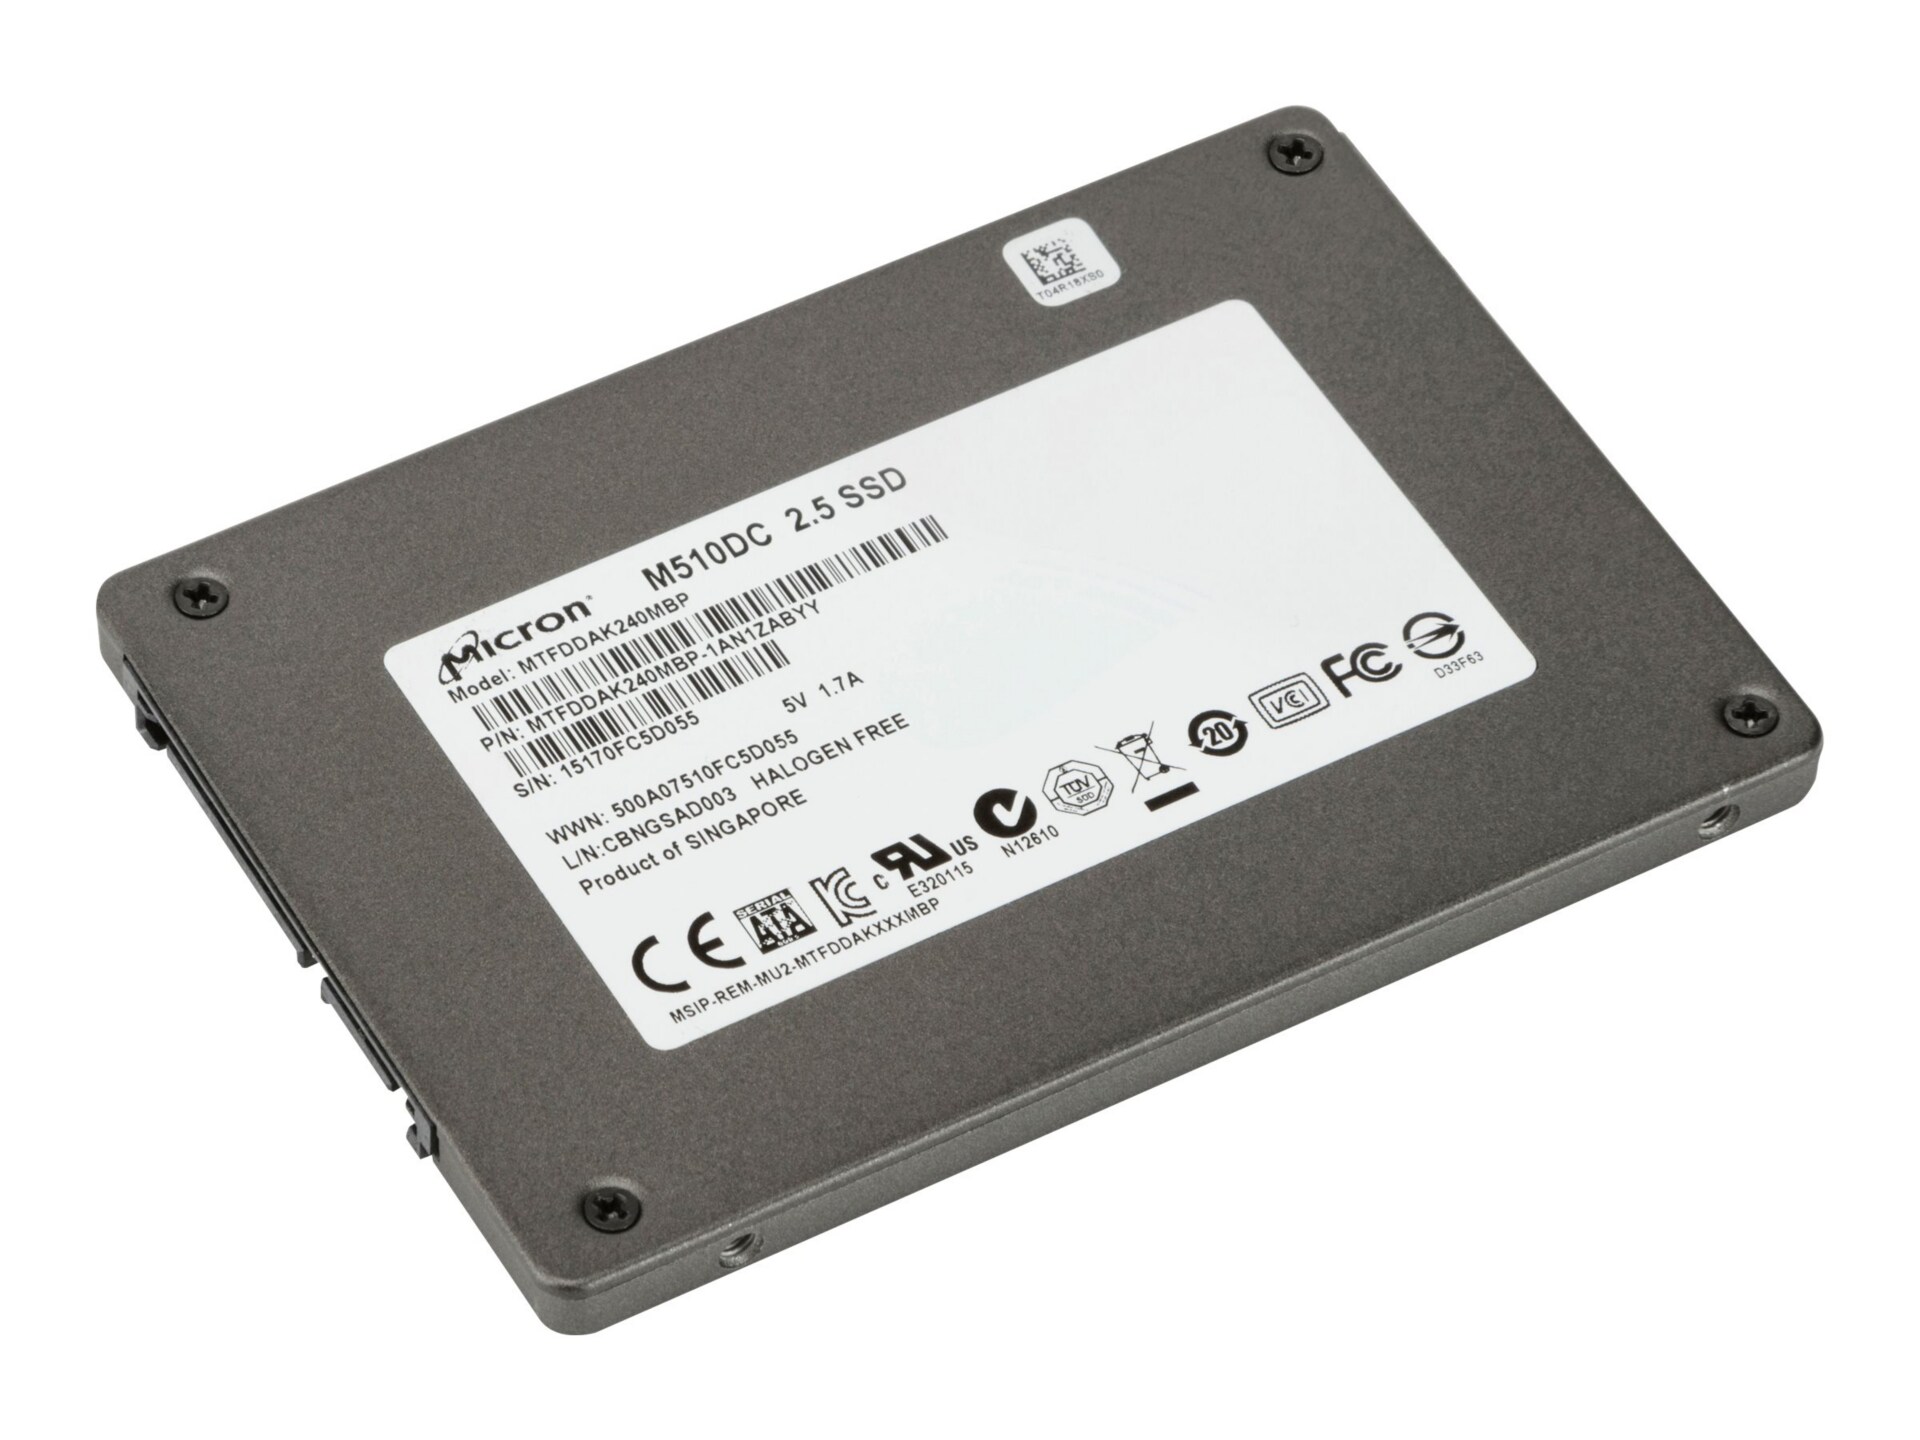 HP 480 GB Solid State Drive - Internal - SATA